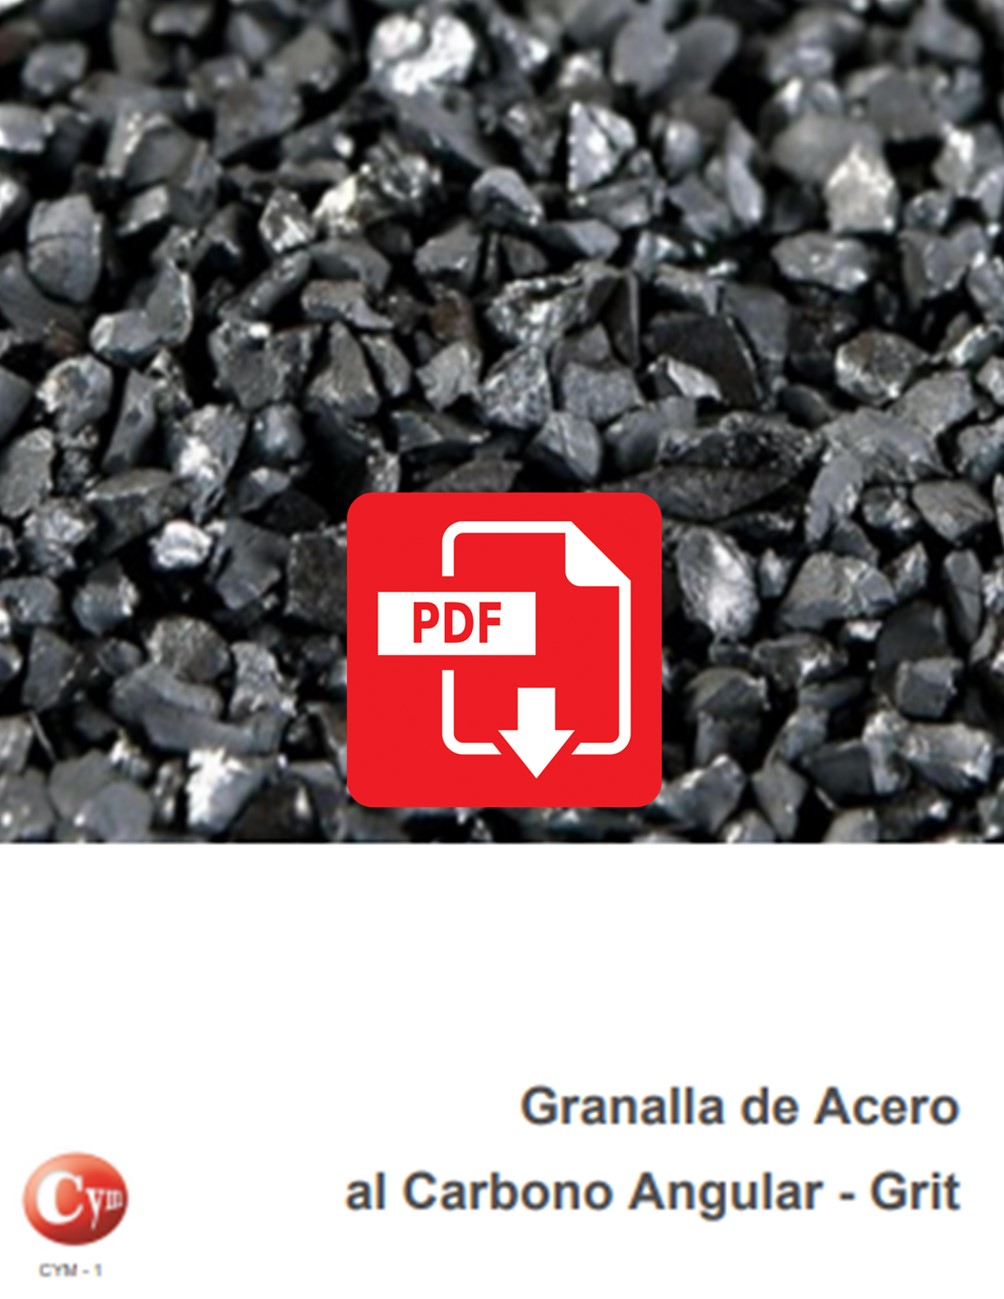 Jatemento-Granalha-aco-carbono-angular-grit-ficha-tecnica-metalcym-blasting